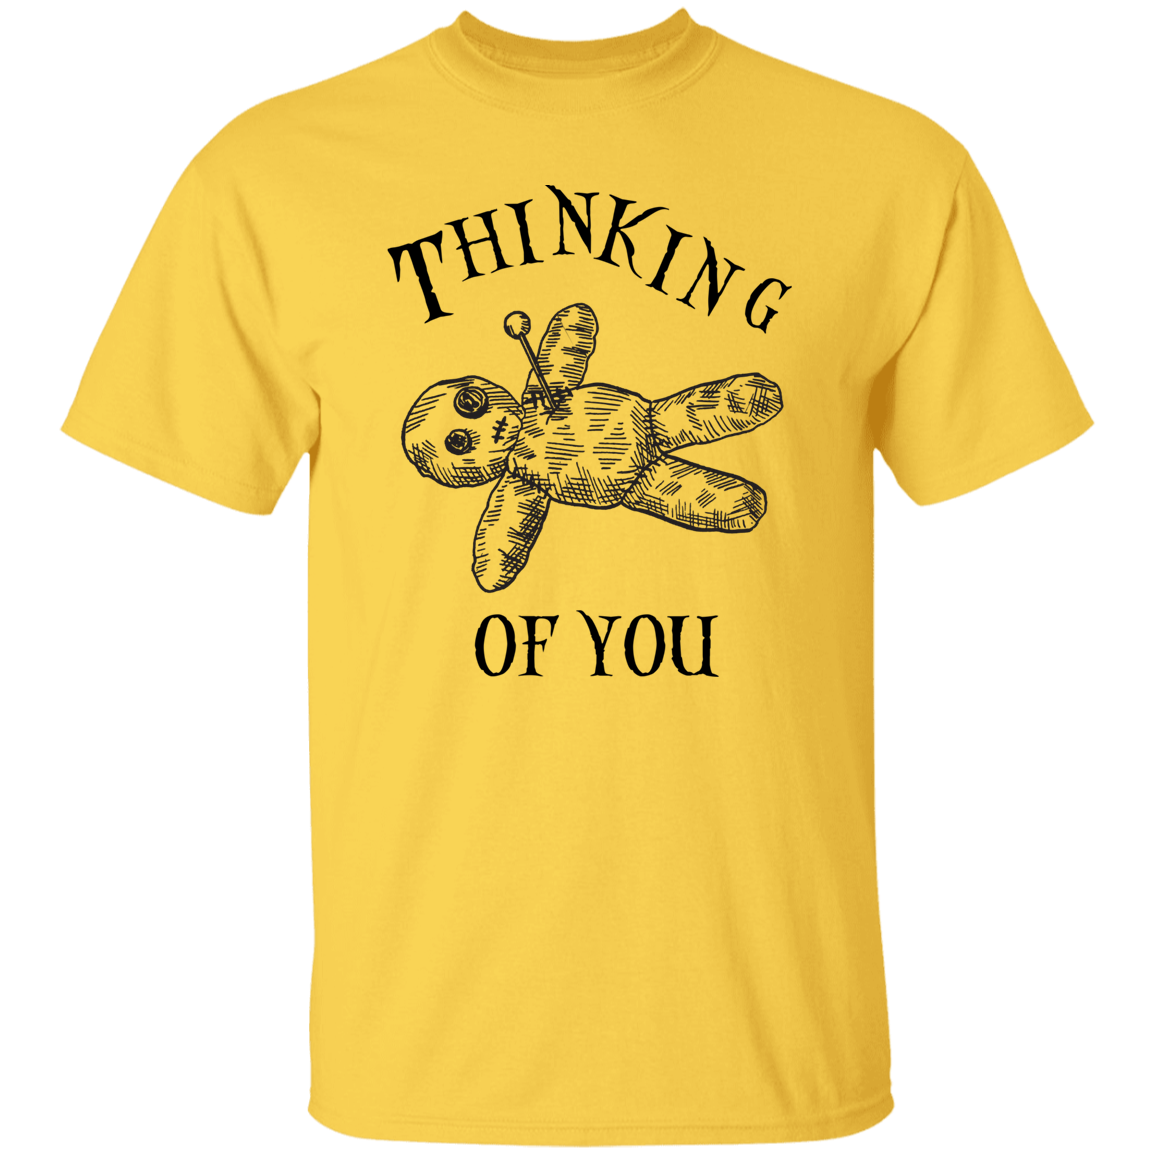 THINKING OF YOU  5.3 oz. T-Shirt